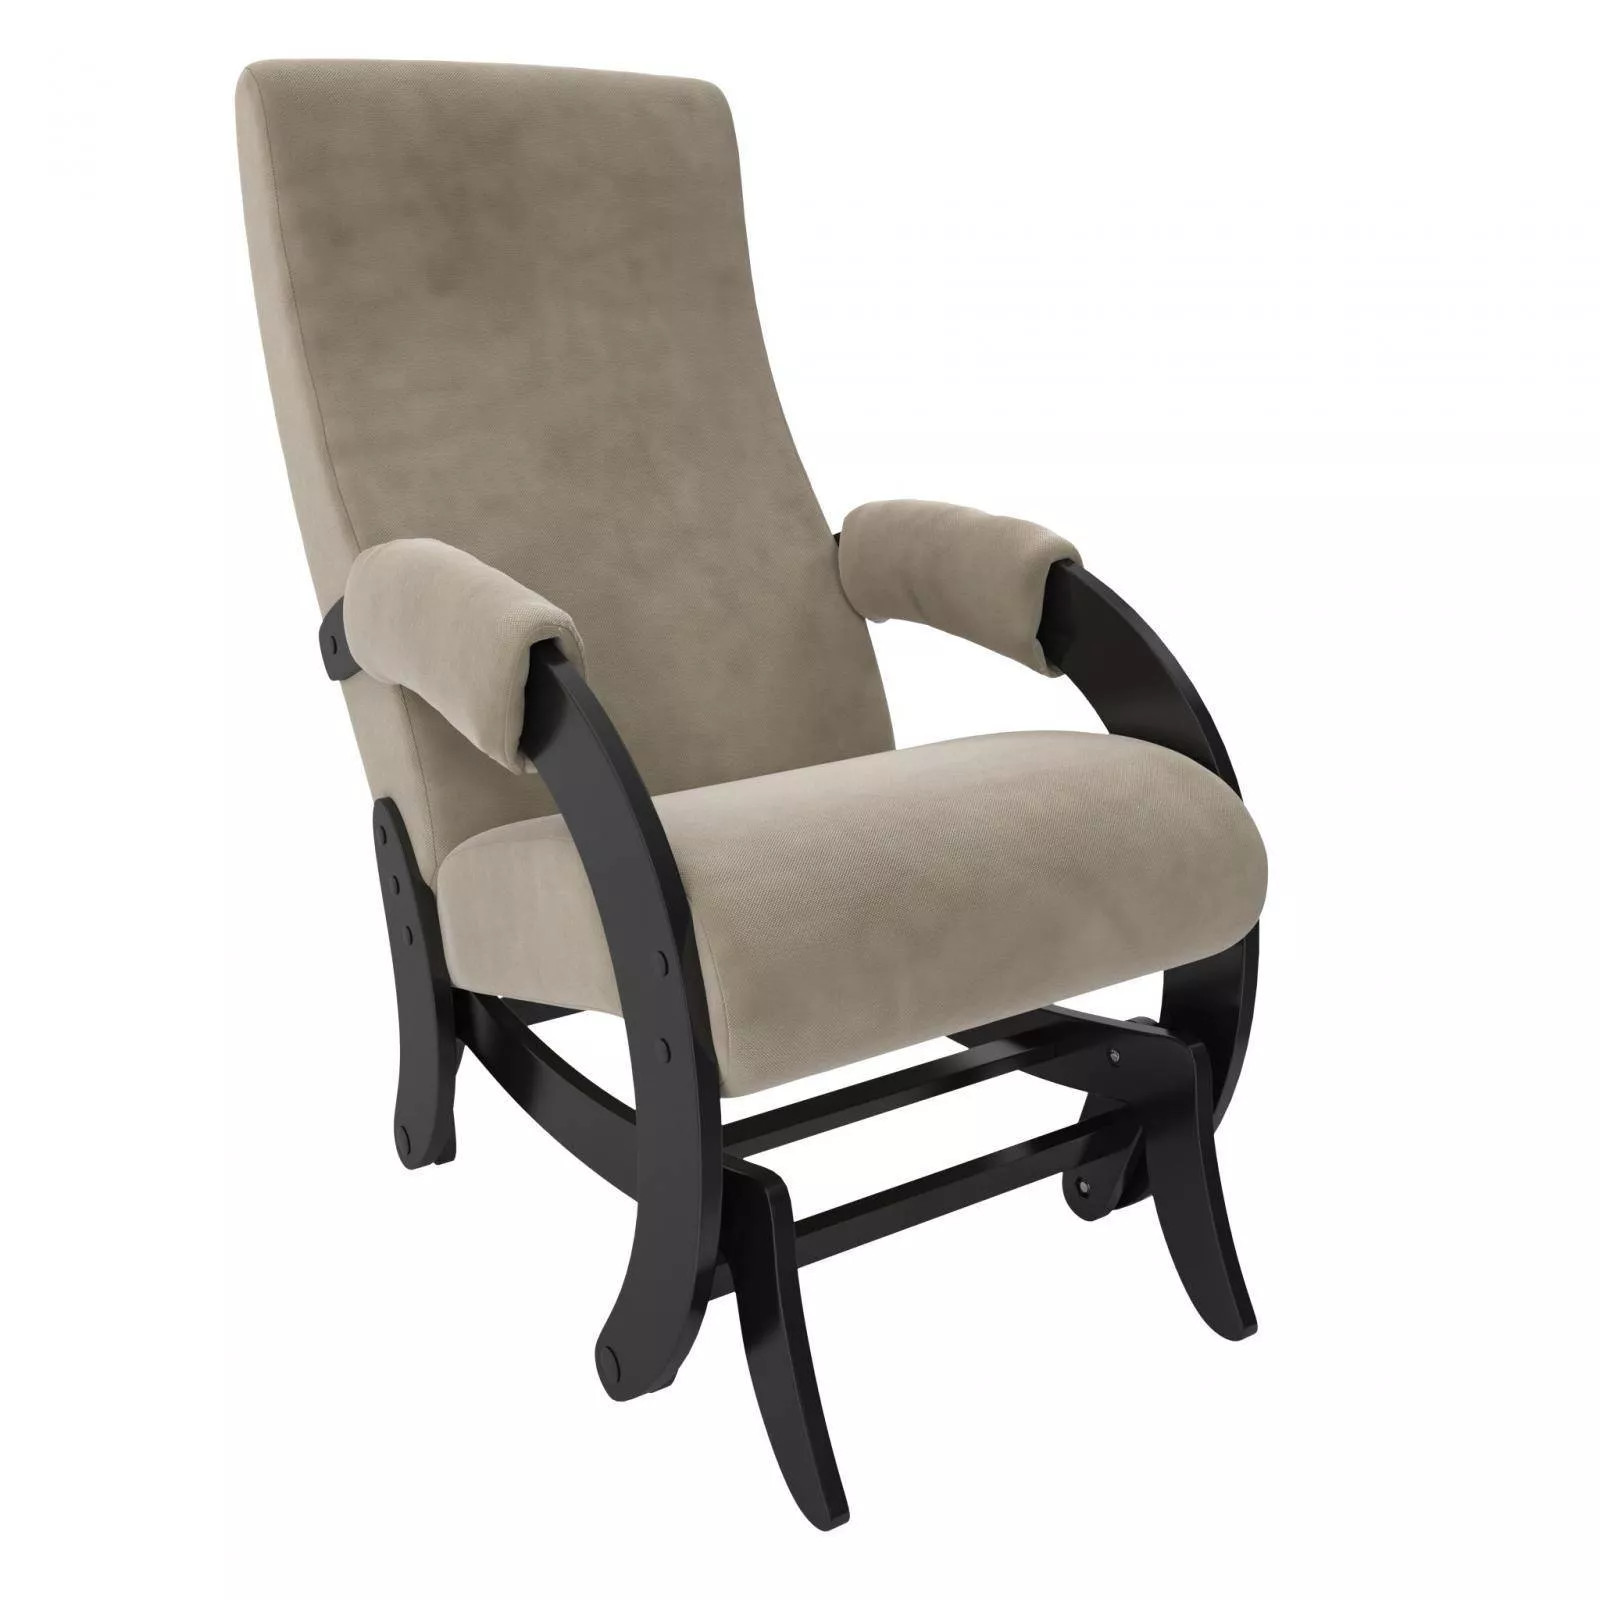 Кресло-глайдер Модель 68 Венге / ophelia1